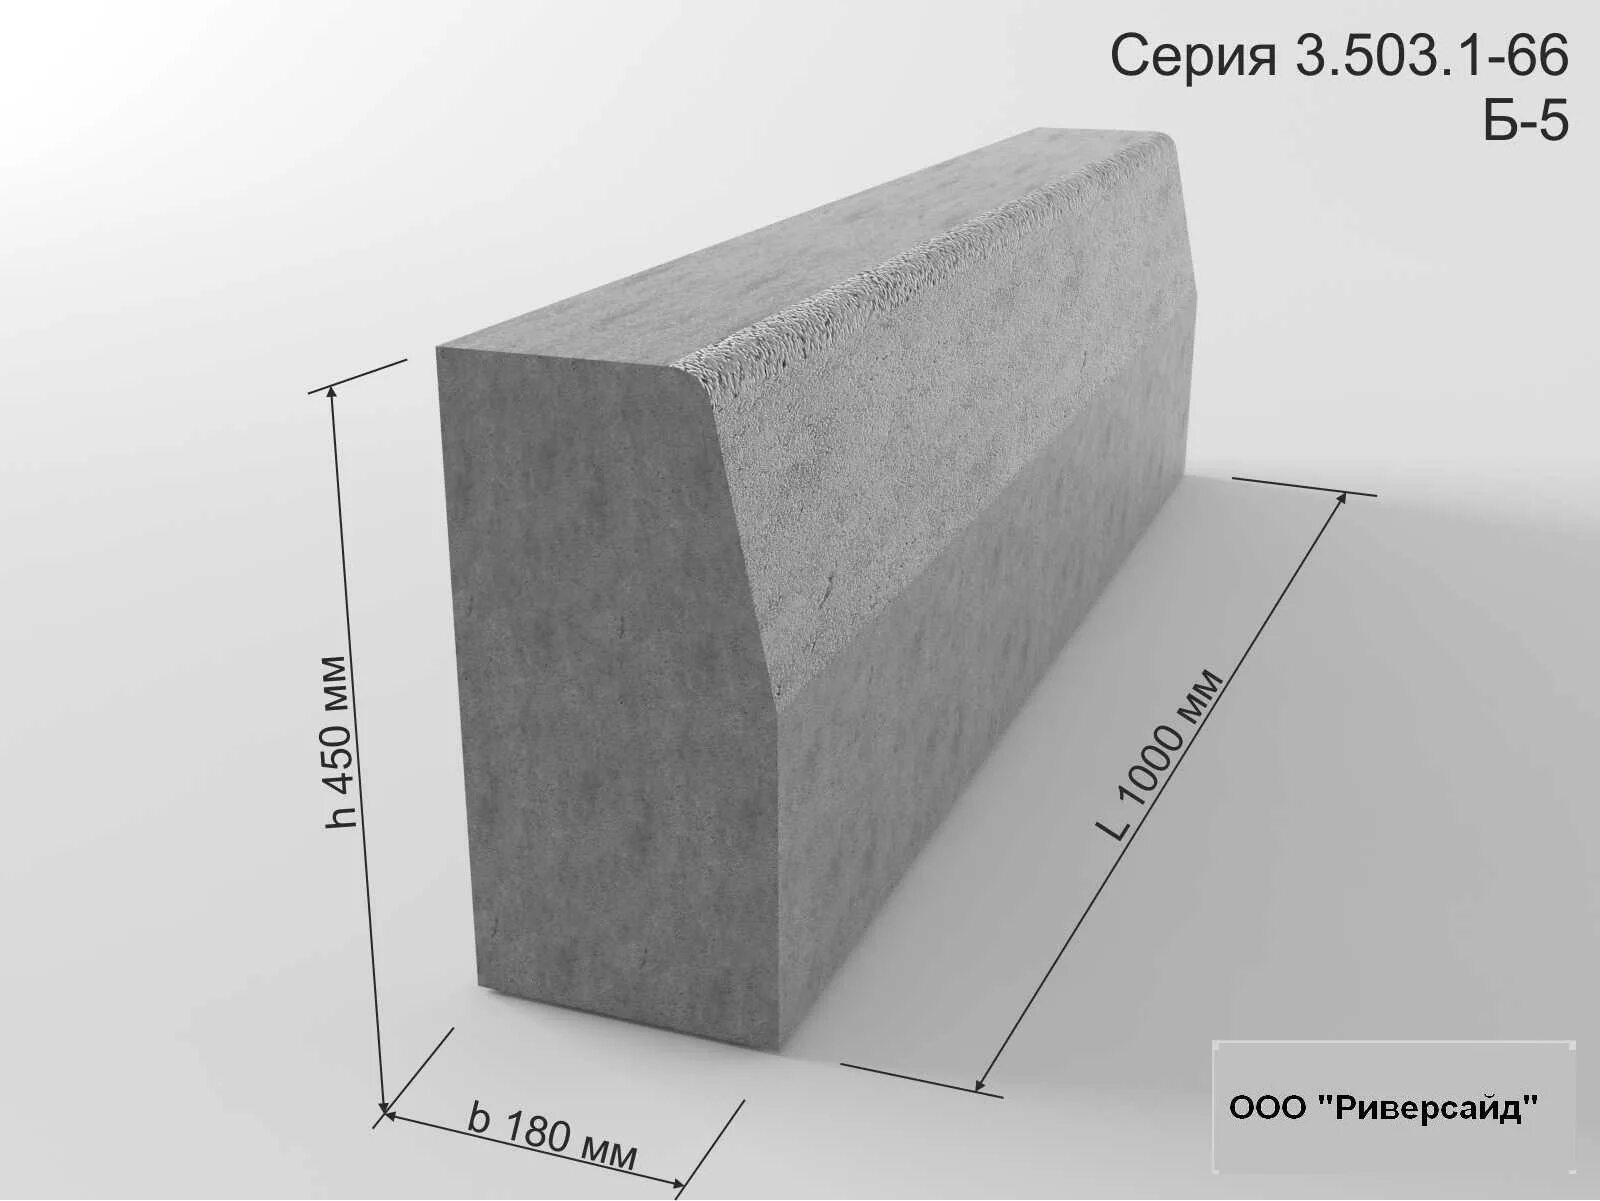 180 300 мм. Блок бетонный б-5 (с.3.503.1-66). Борт камень бр 100.30.15. Блок бордюра бр 100. Поребрик высота бр100-30-15.